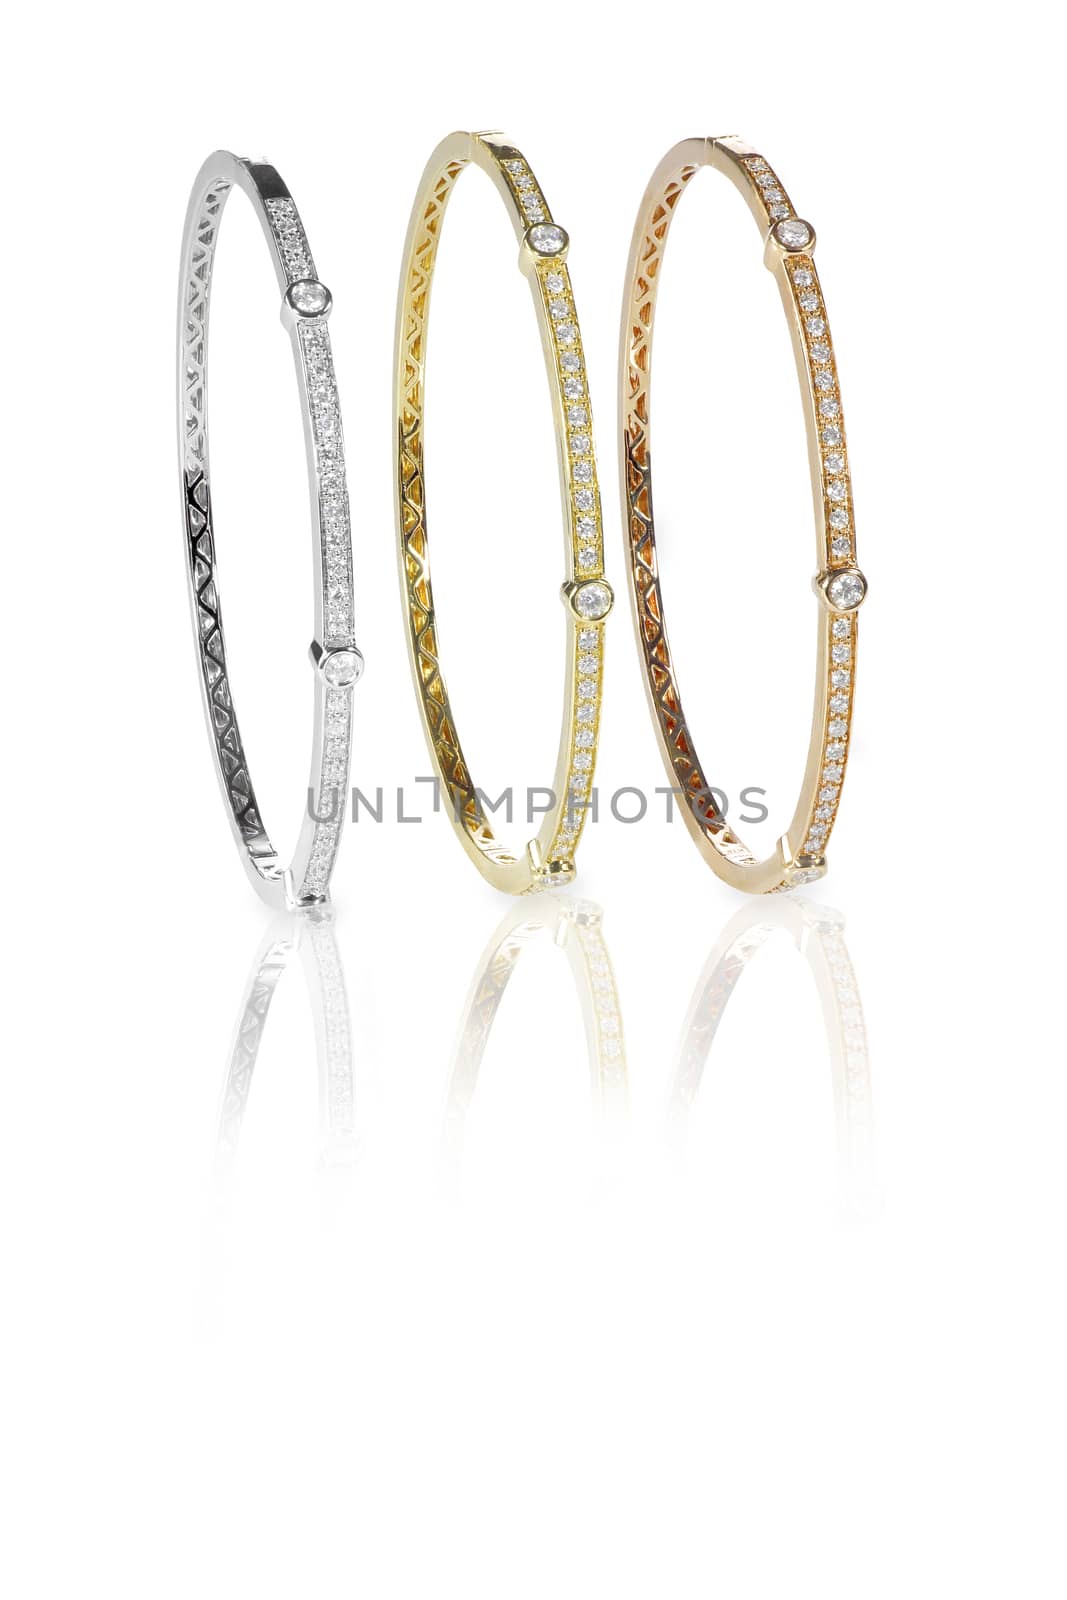 Set of three colored gold diamond bangle bracelets standing upri by fruitcocktail